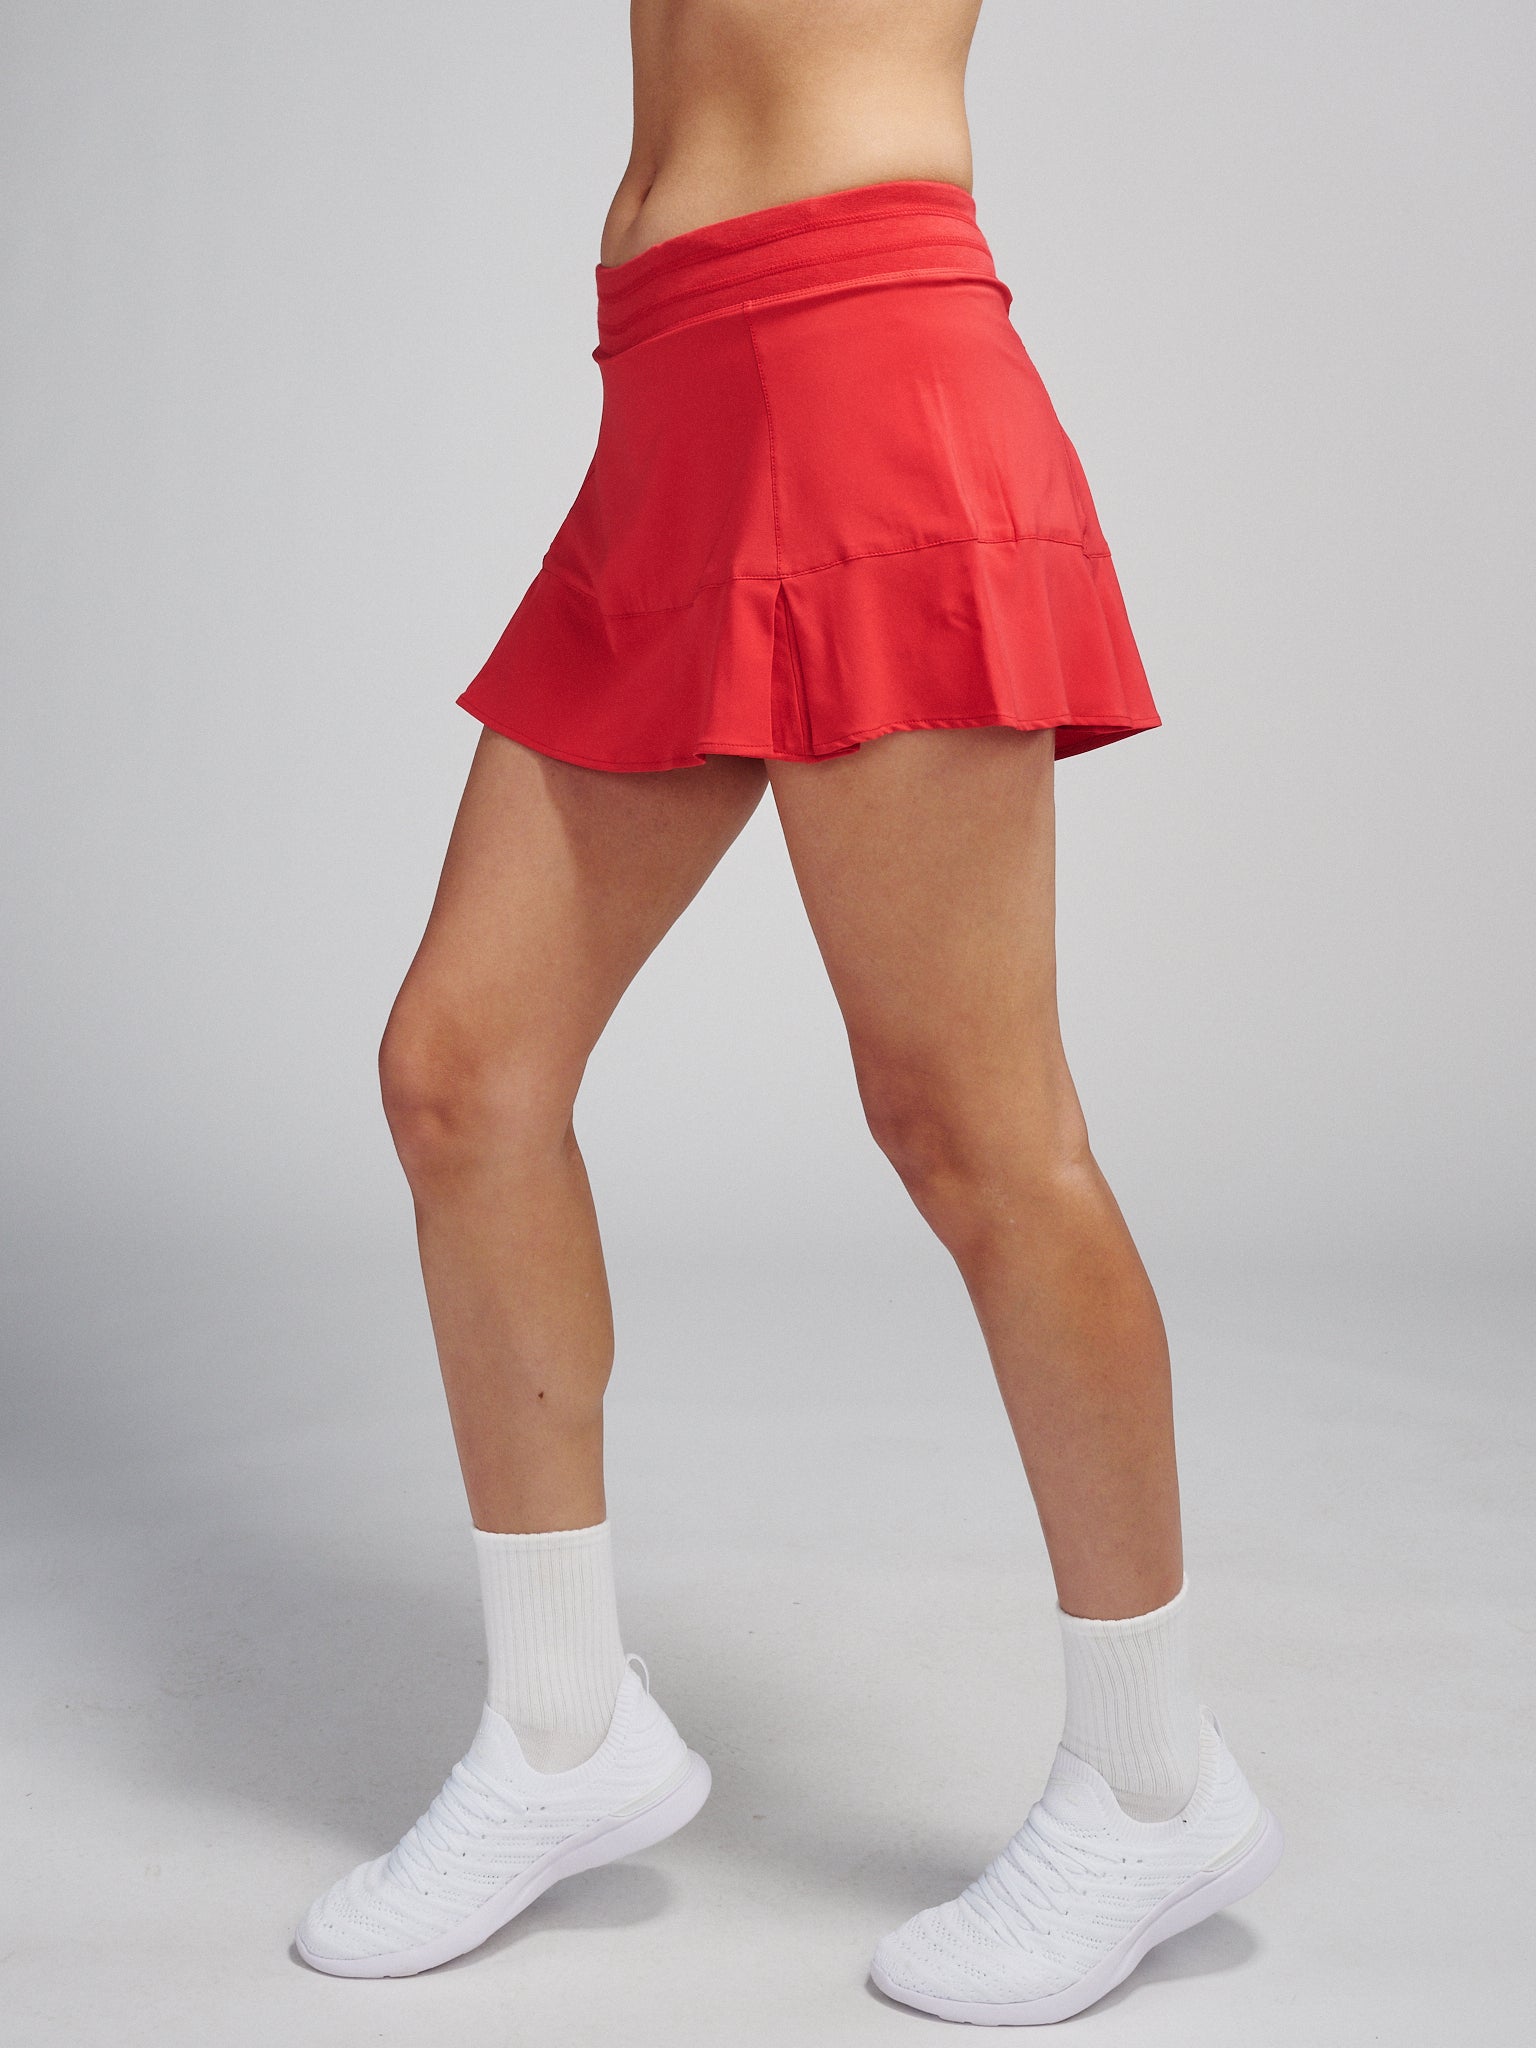 Saucer Følge efter sekstant Women's Rhythm Tennis Skirt | Active Apparel | tasc Performance